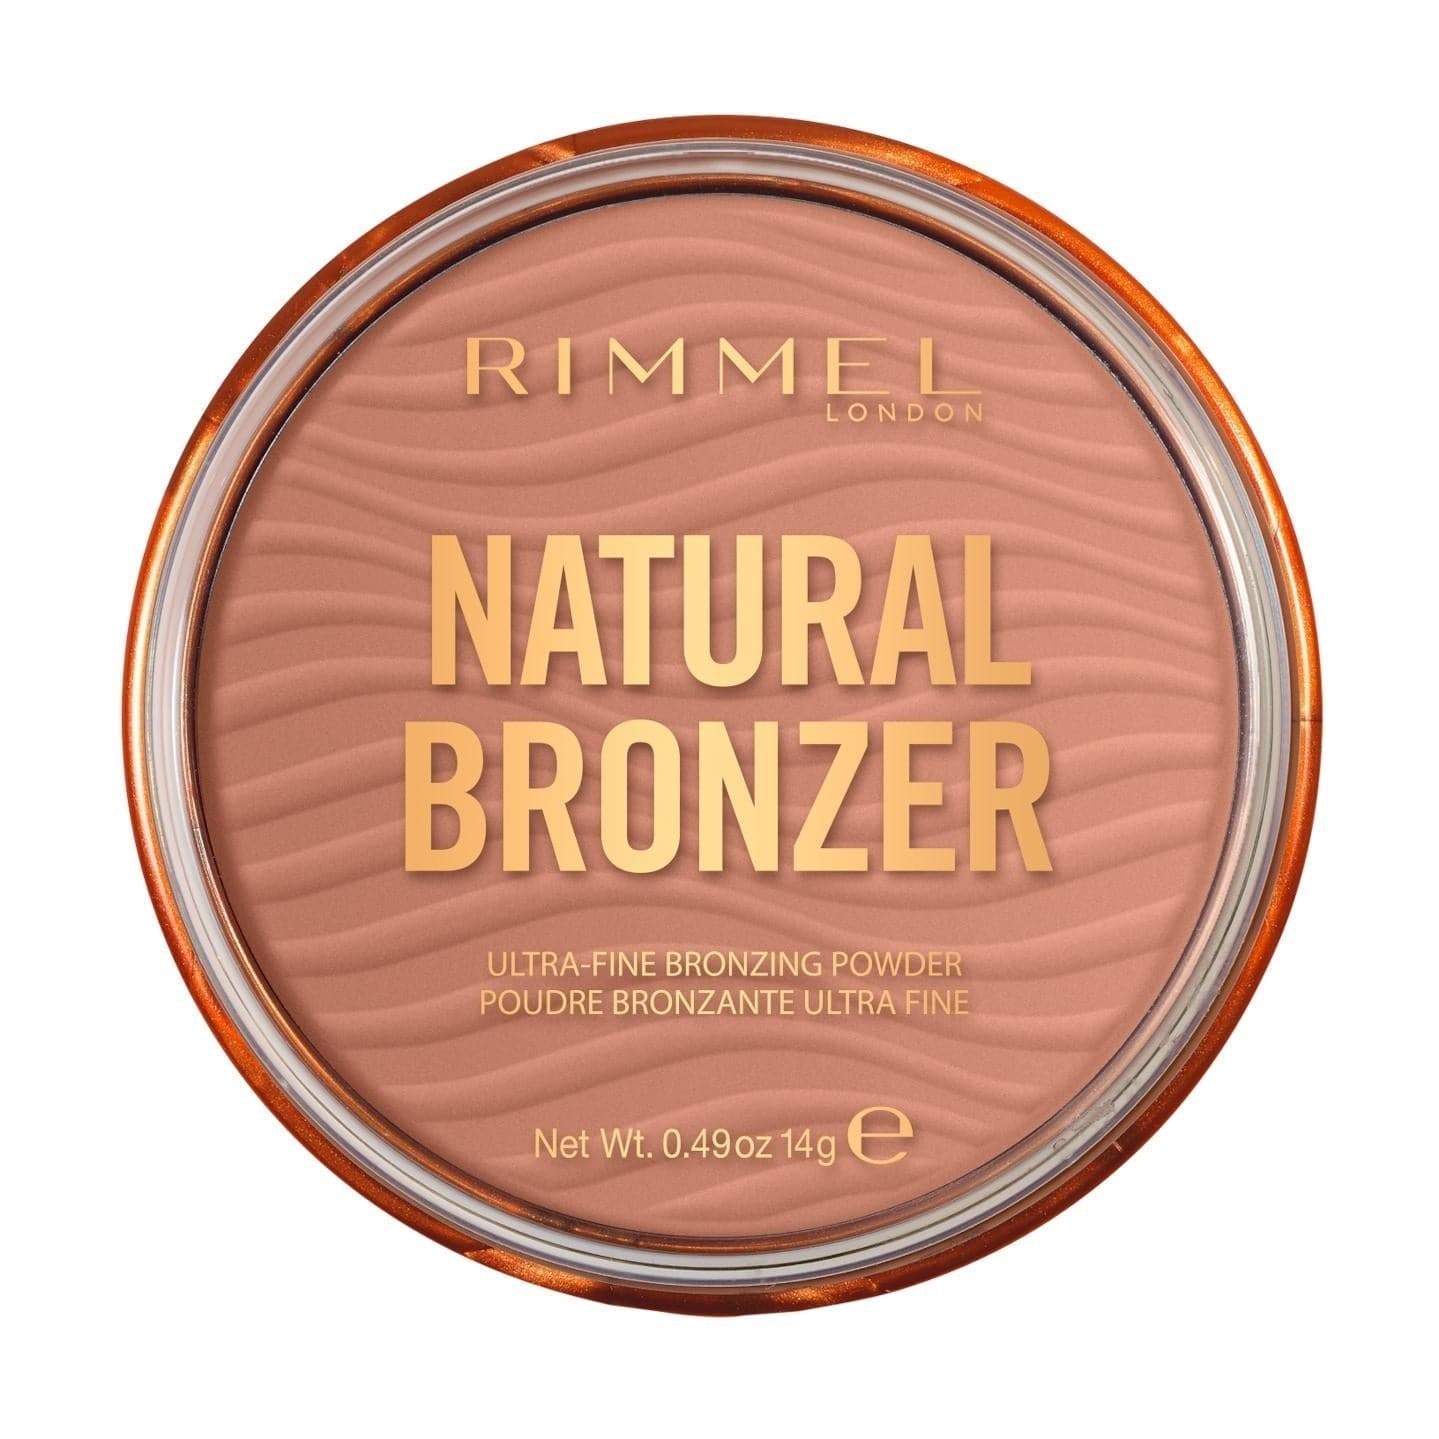 Rimmel London Natural Bronzer Restage - 001 Sunlight - Premium Health & Beauty from Rimmel London - Just Rs 2140! Shop now at Cozmetica